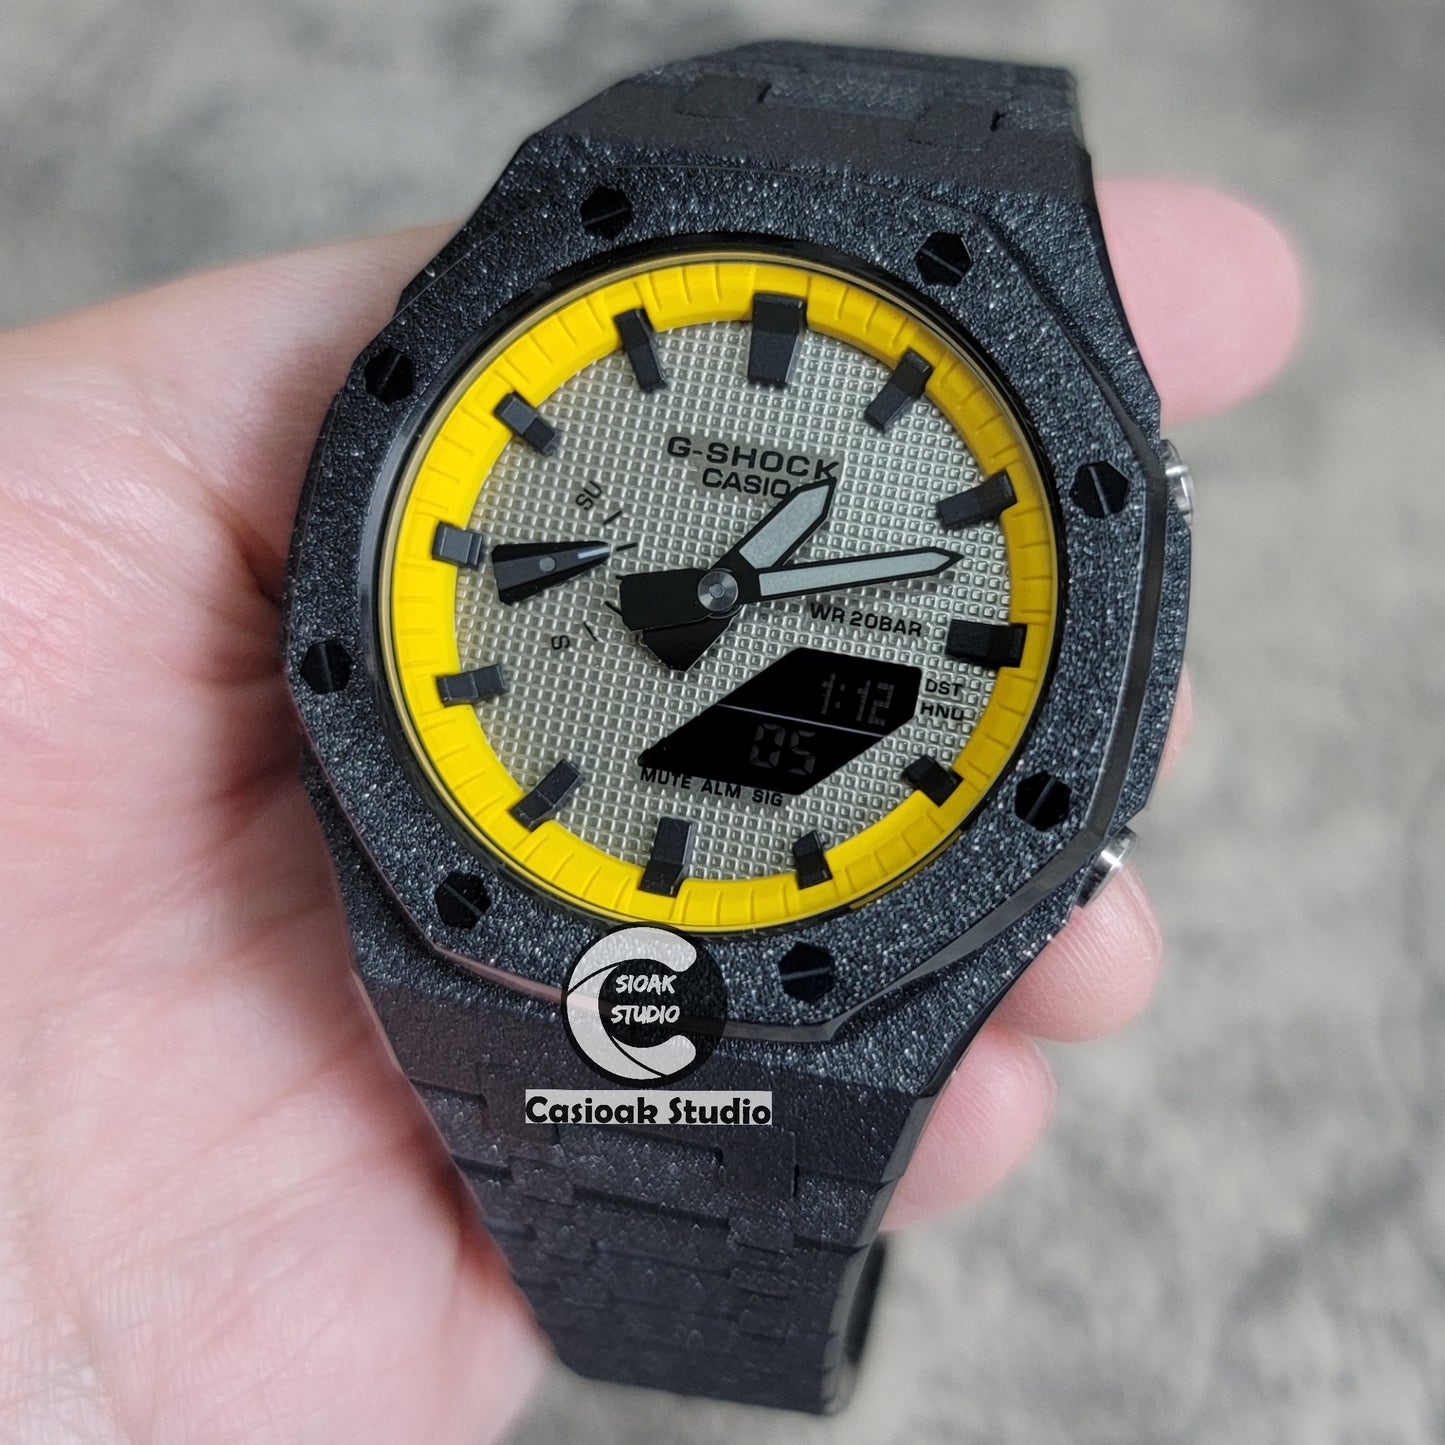 Casioak Mod Watch Frosted Black Case Metal Strap Yellow Black Time Mark Gray Dial 44mm - Casioak Studio